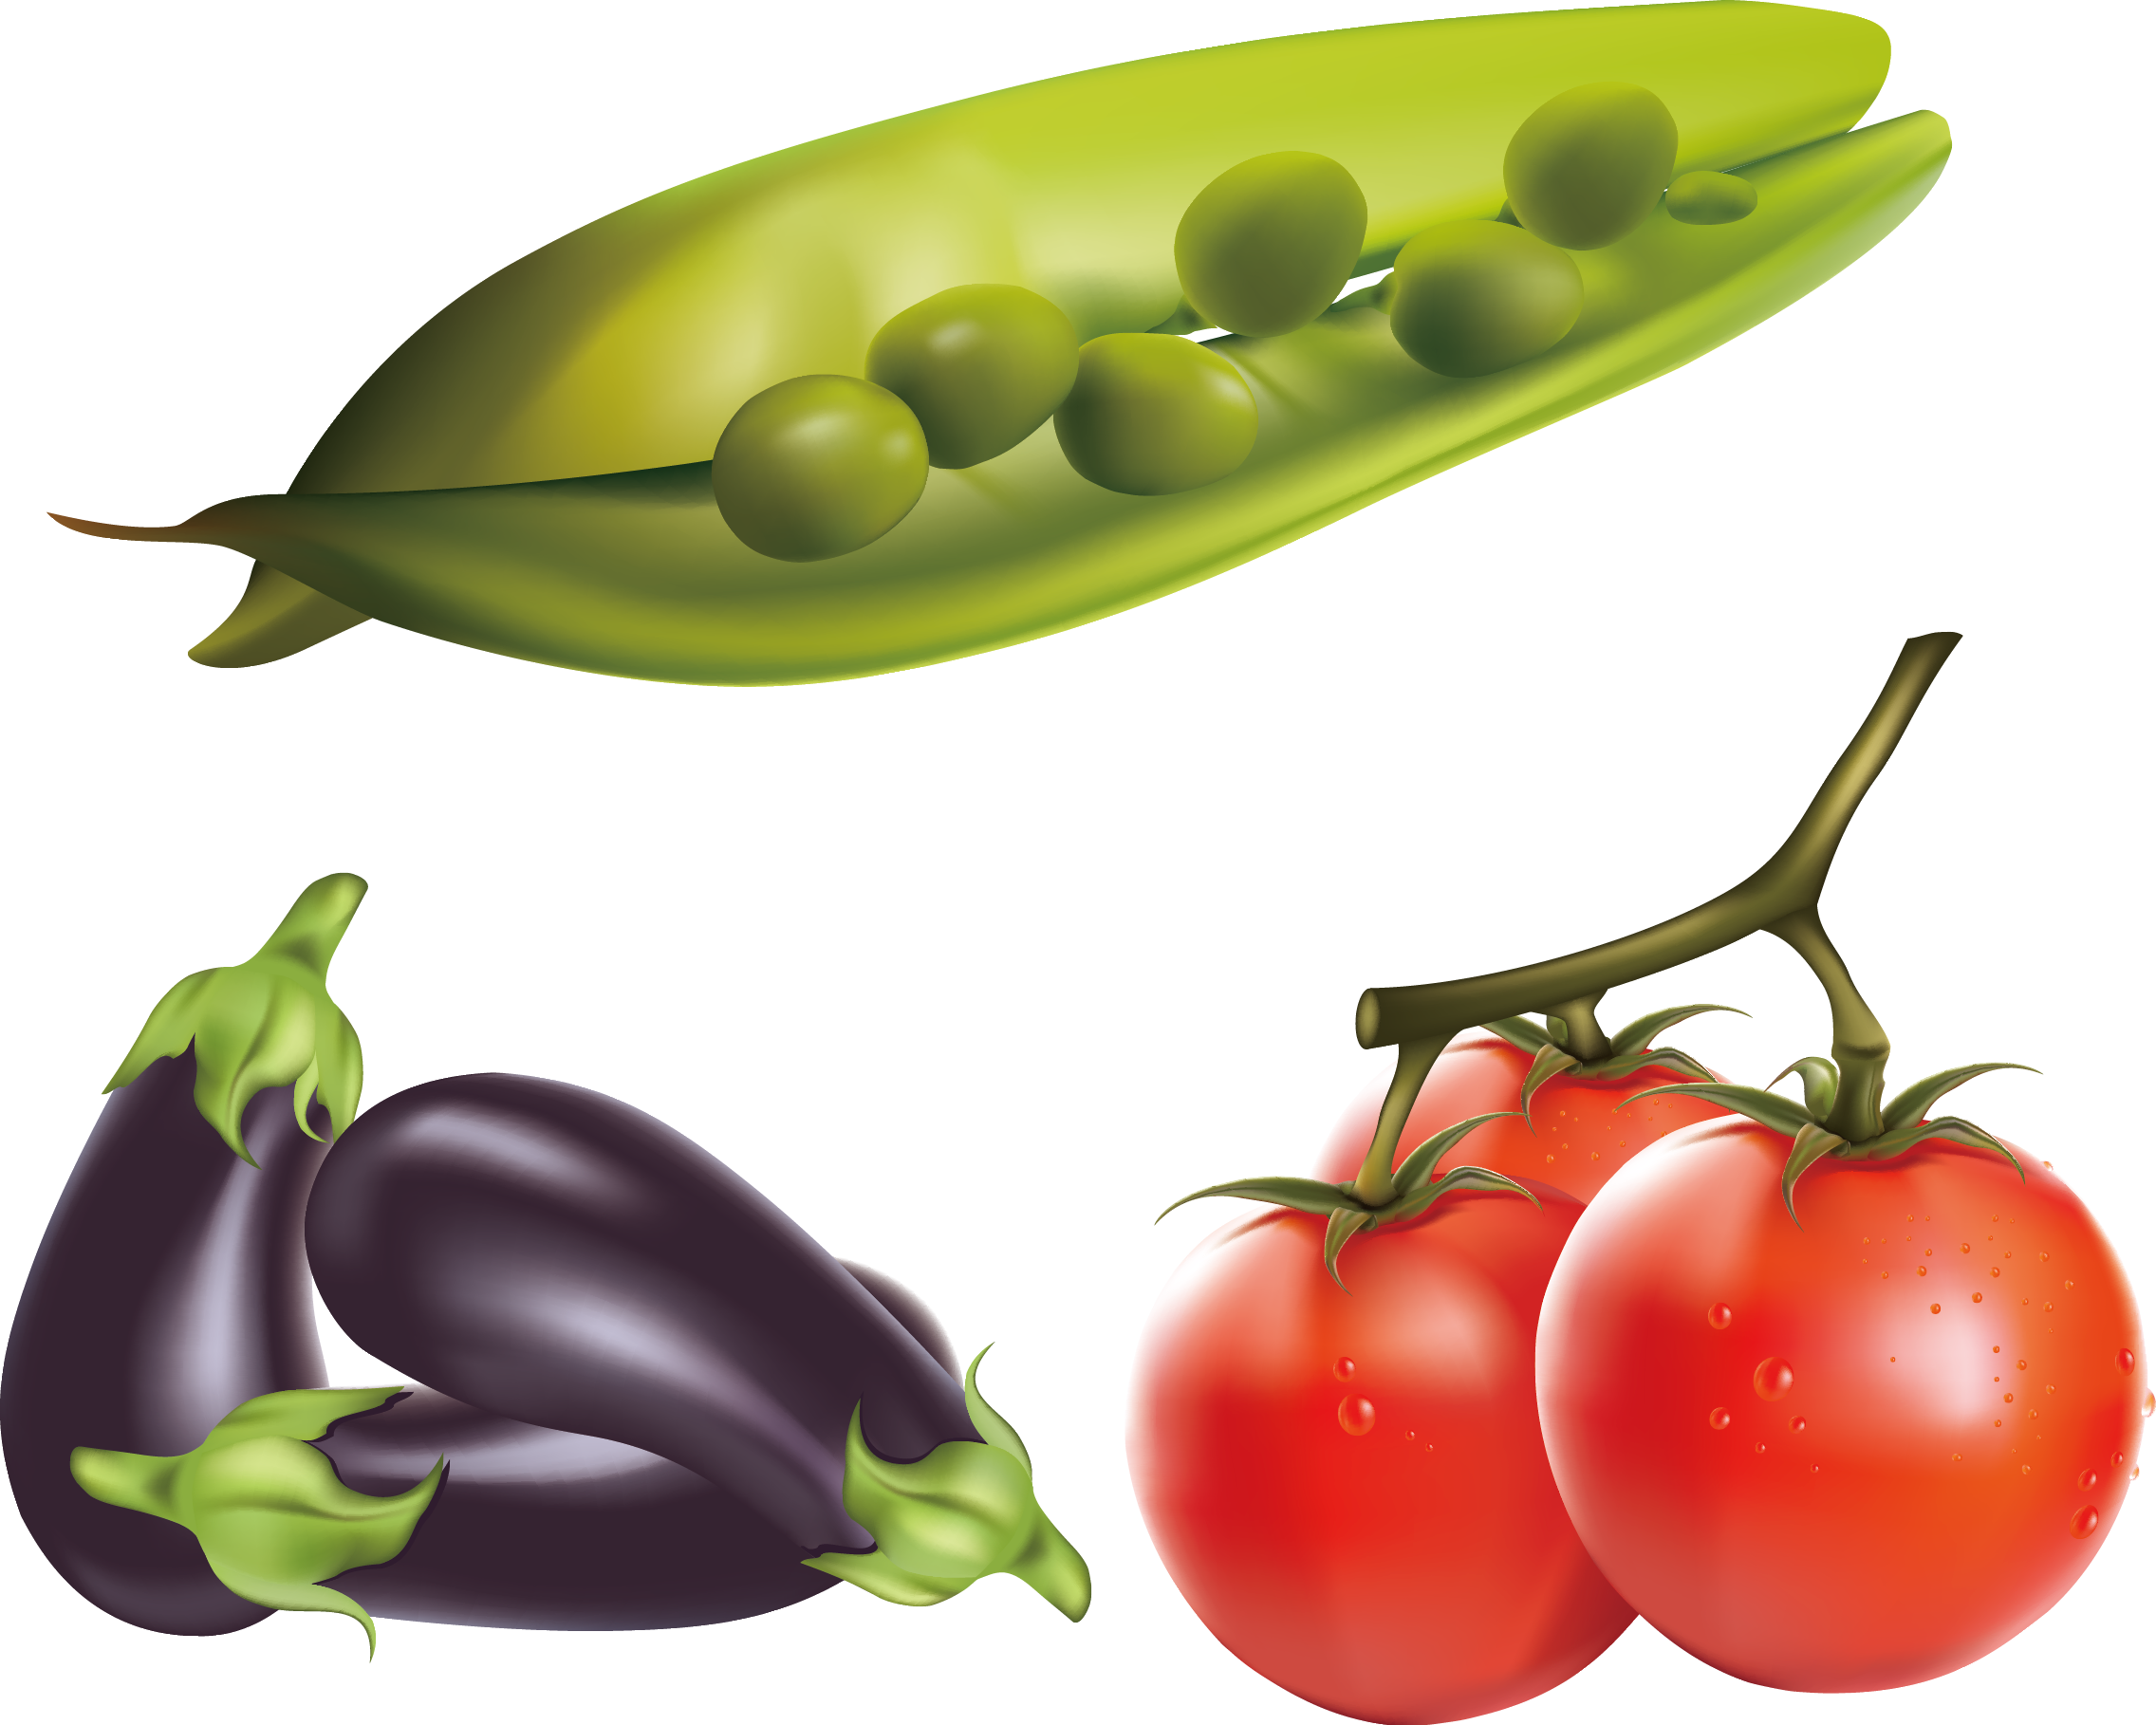 Eggplant tomato clip art. Vegetables clipart fresh vegetable